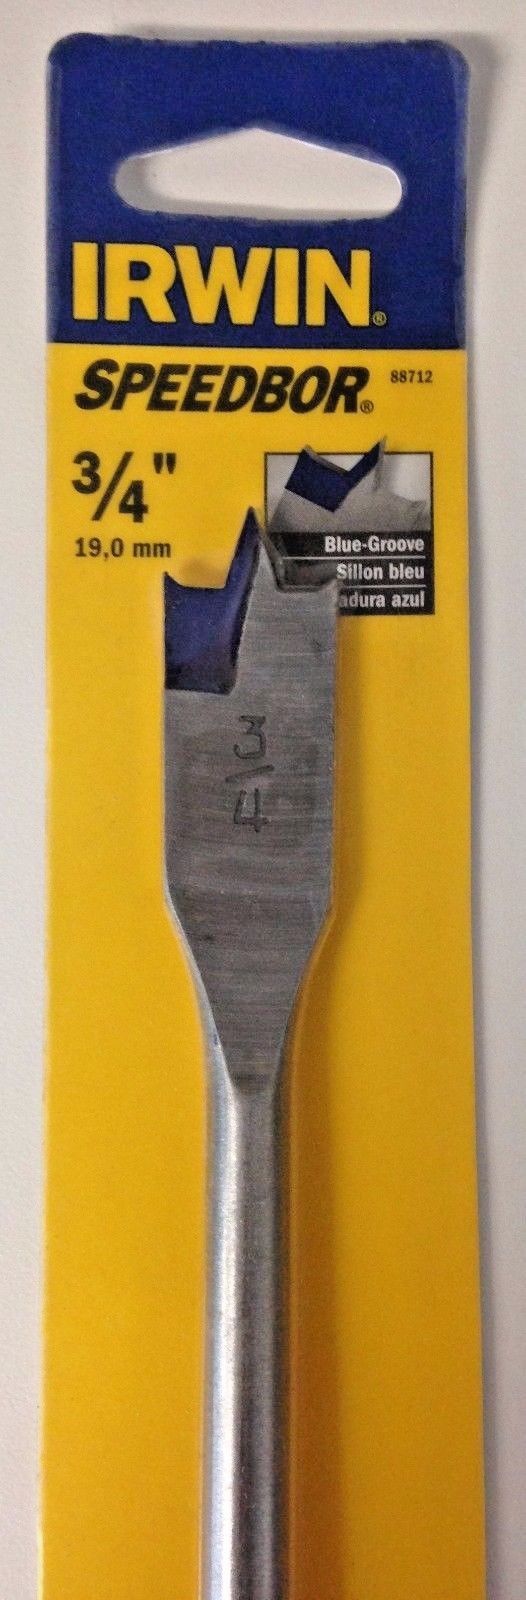 Irwin Speedbor 88712 3/4" x 16" Extra-Long Spade Bit Carded